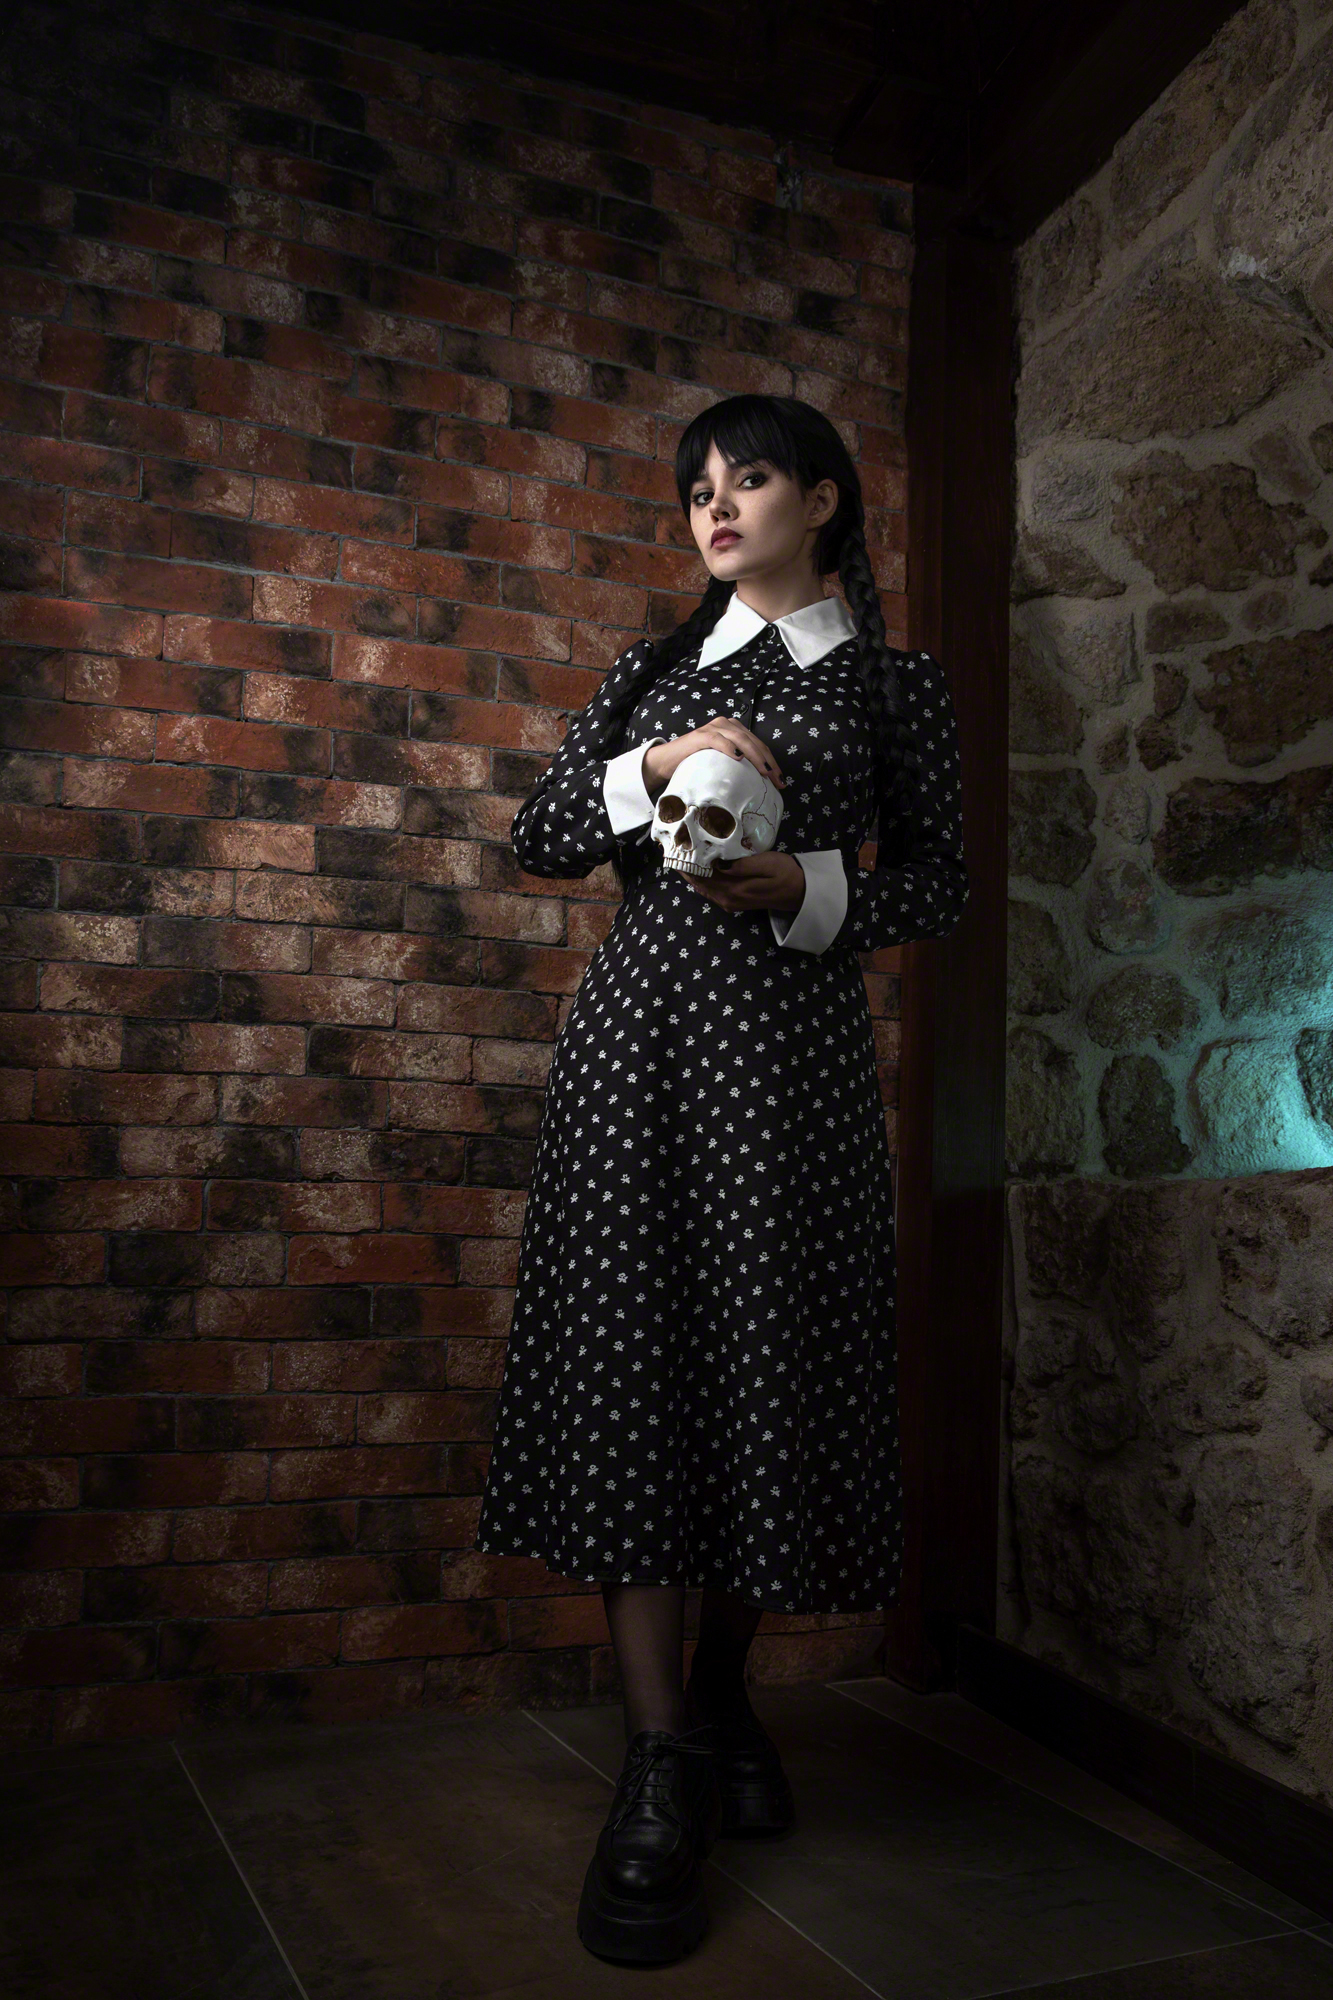 Cosplay Wednesday TV Series Wednesday Addams Skull Bricks Black Dress Women Model Brunette Braids Co 1333x2000